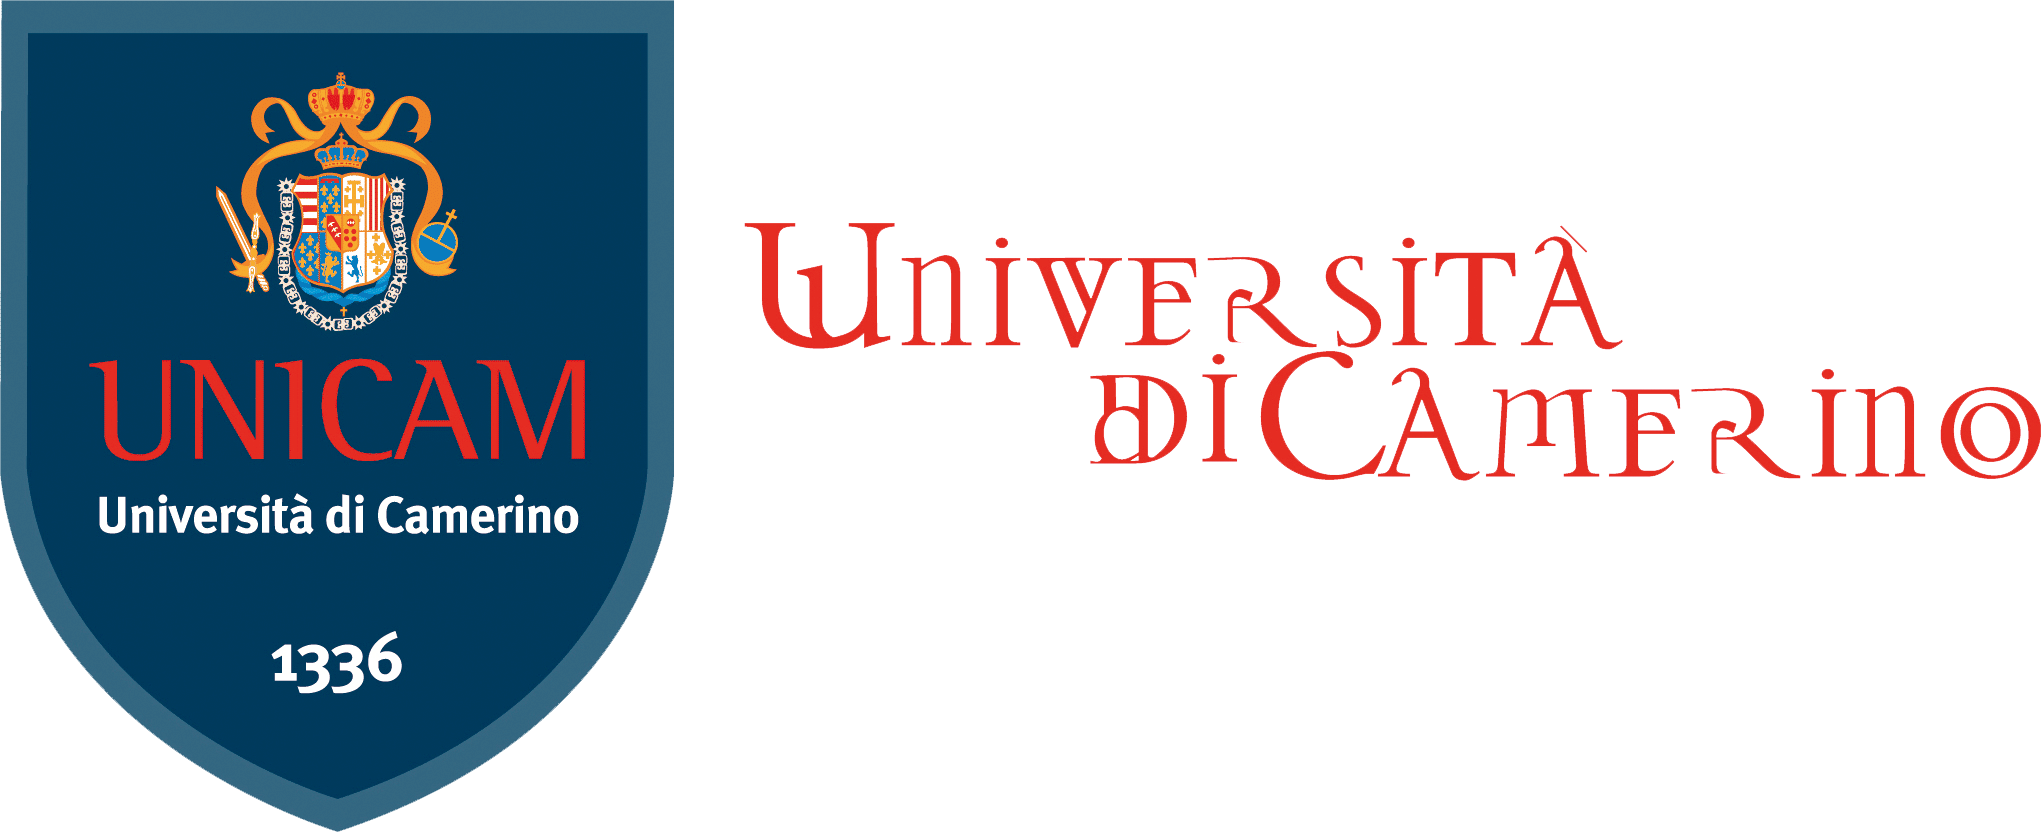 863_unicam-universita-di-camerino-1.png